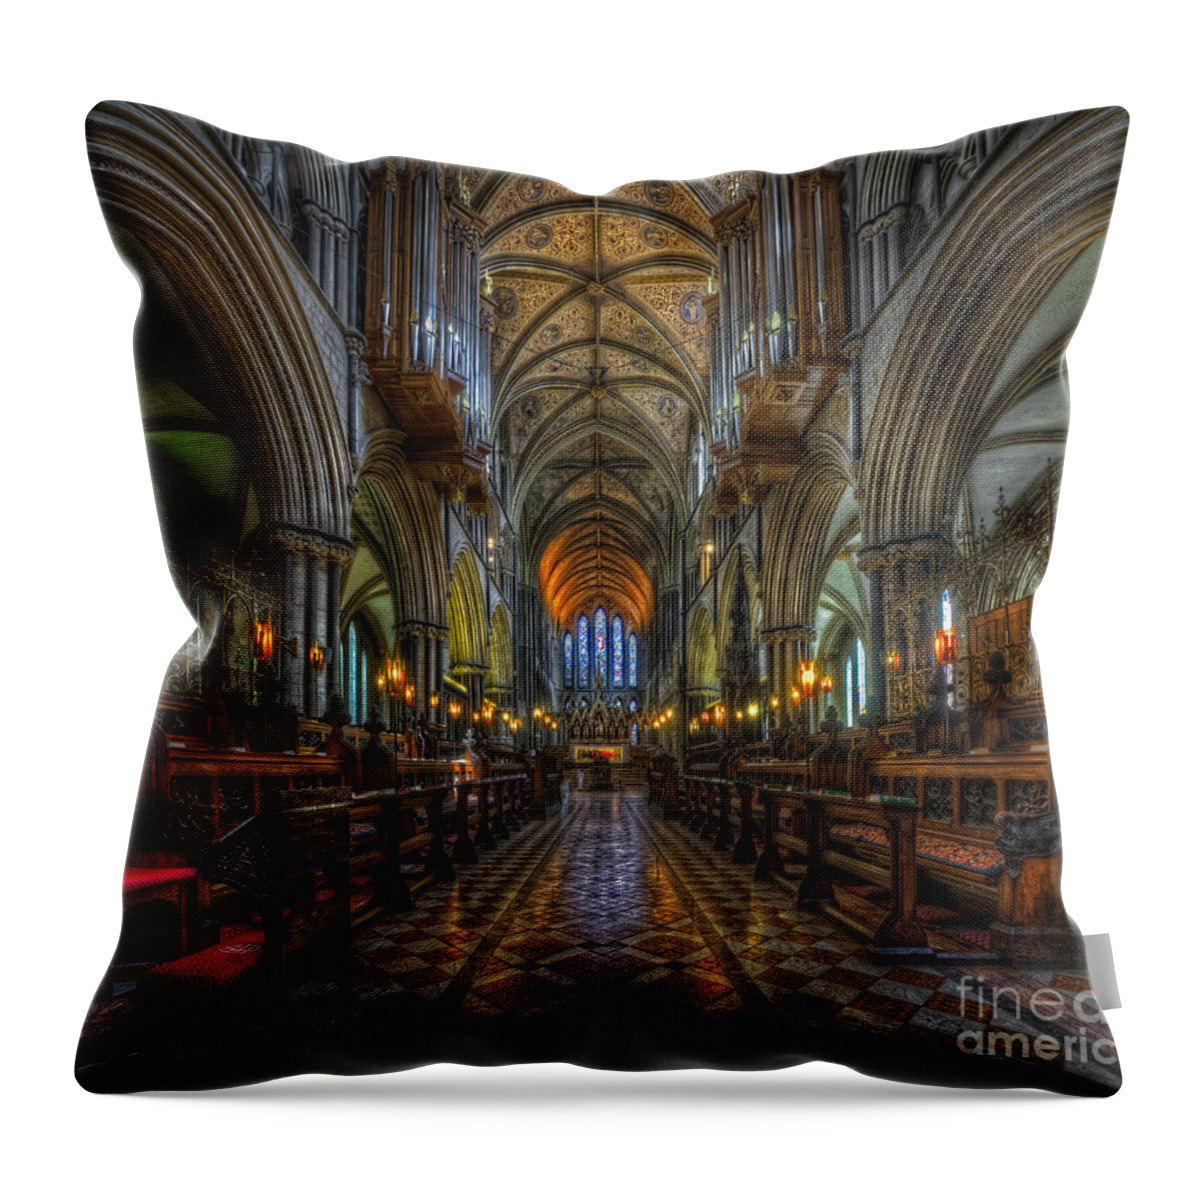 Yhunsuarez Throw Pillow featuring the photograph Cathedral Choir by Yhun Suarez